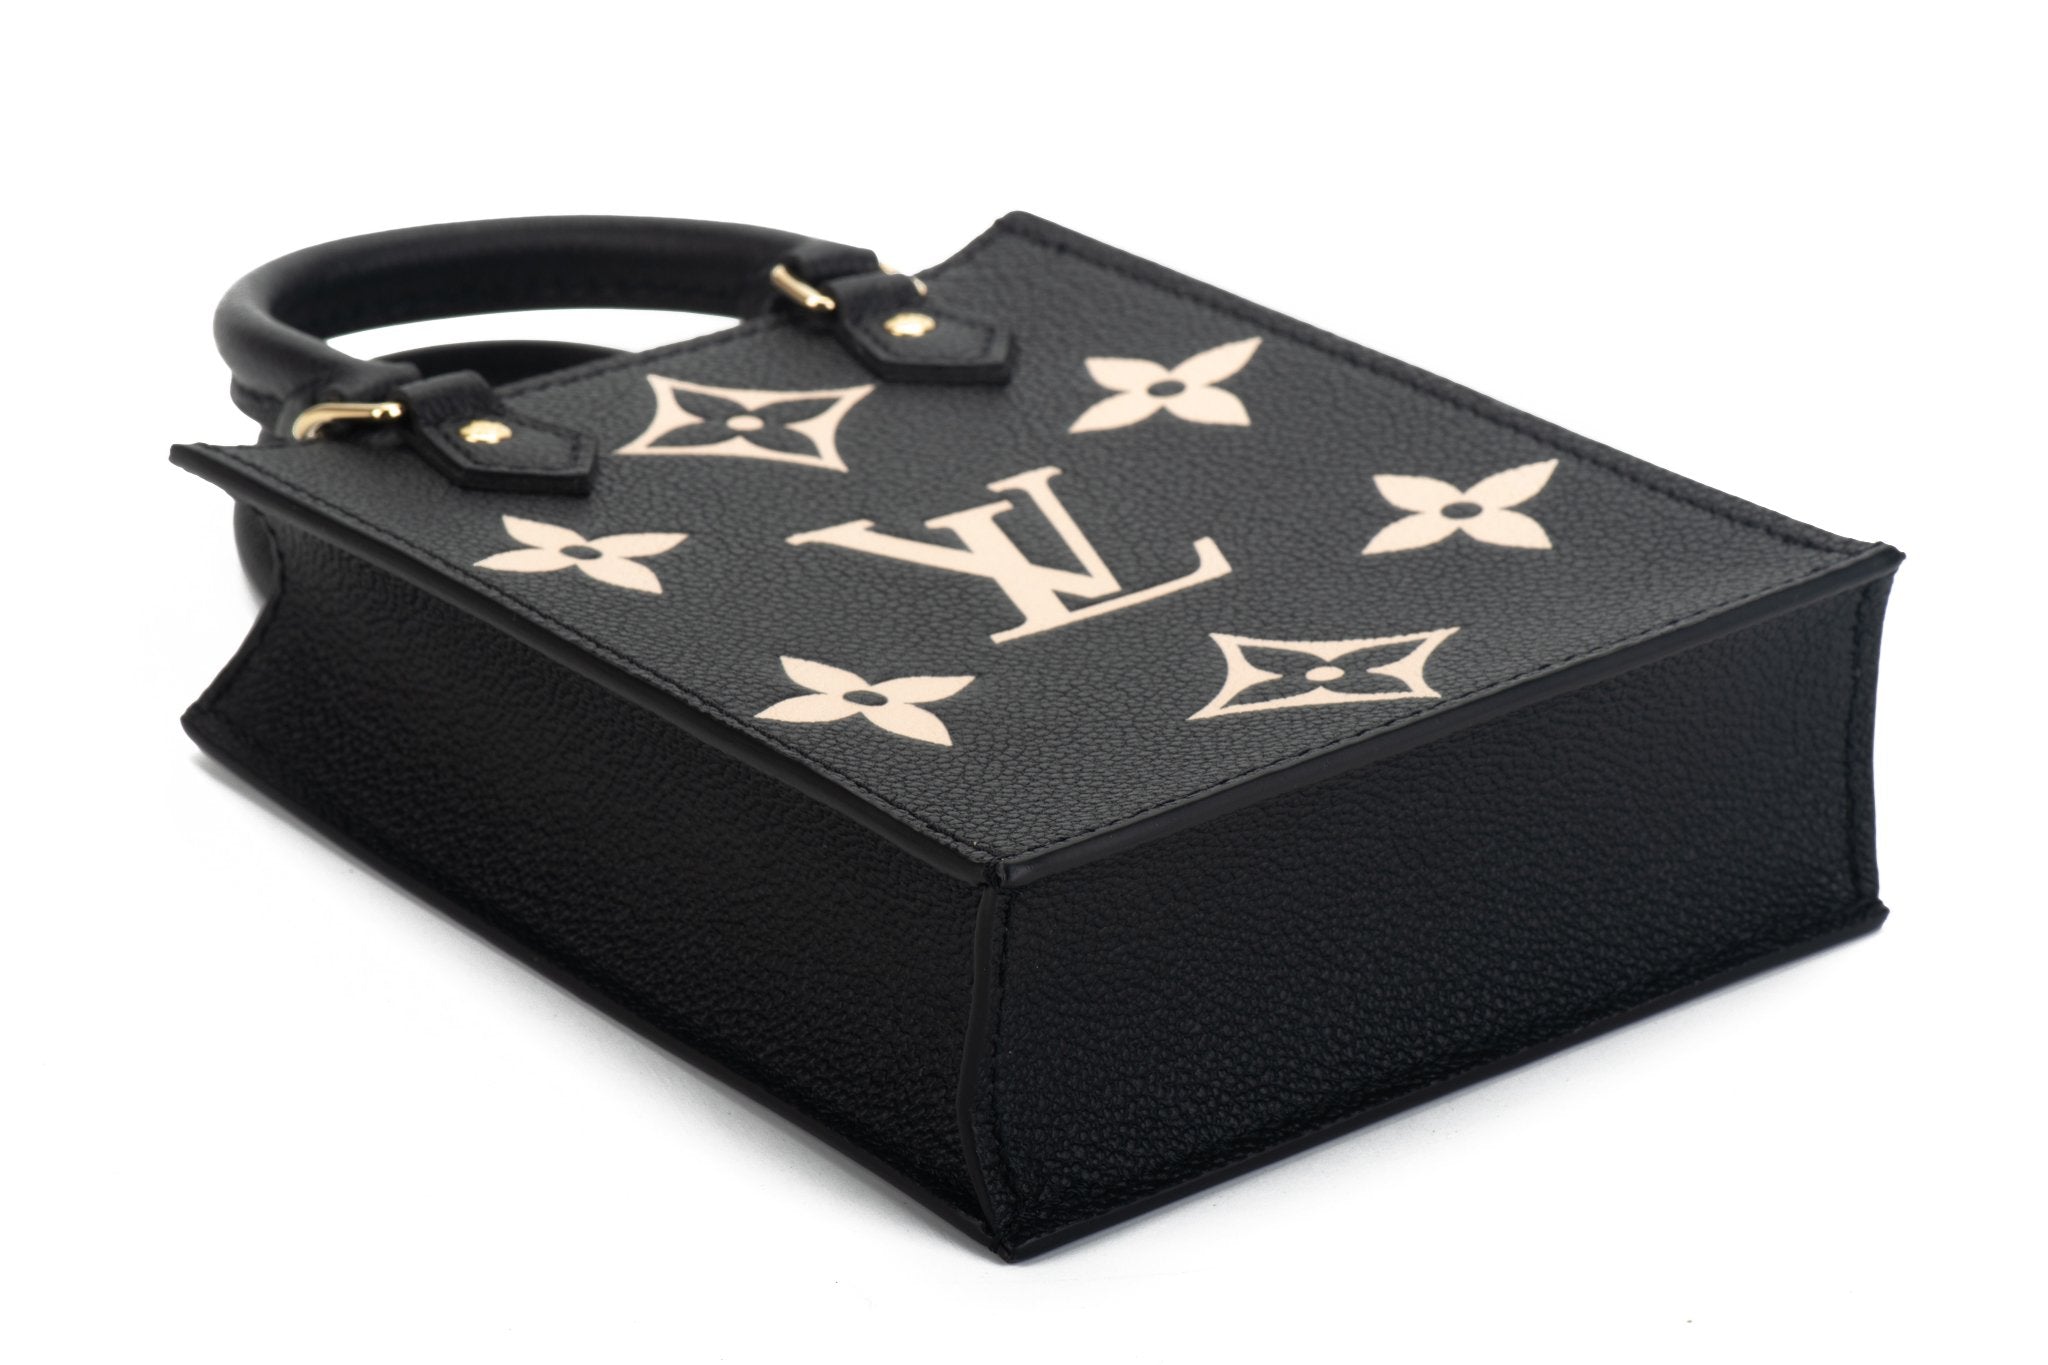 Louis Vuitton X Fornasetti Calfskin Architettura Petit Sac Plat Black –  Coco Approved Studio